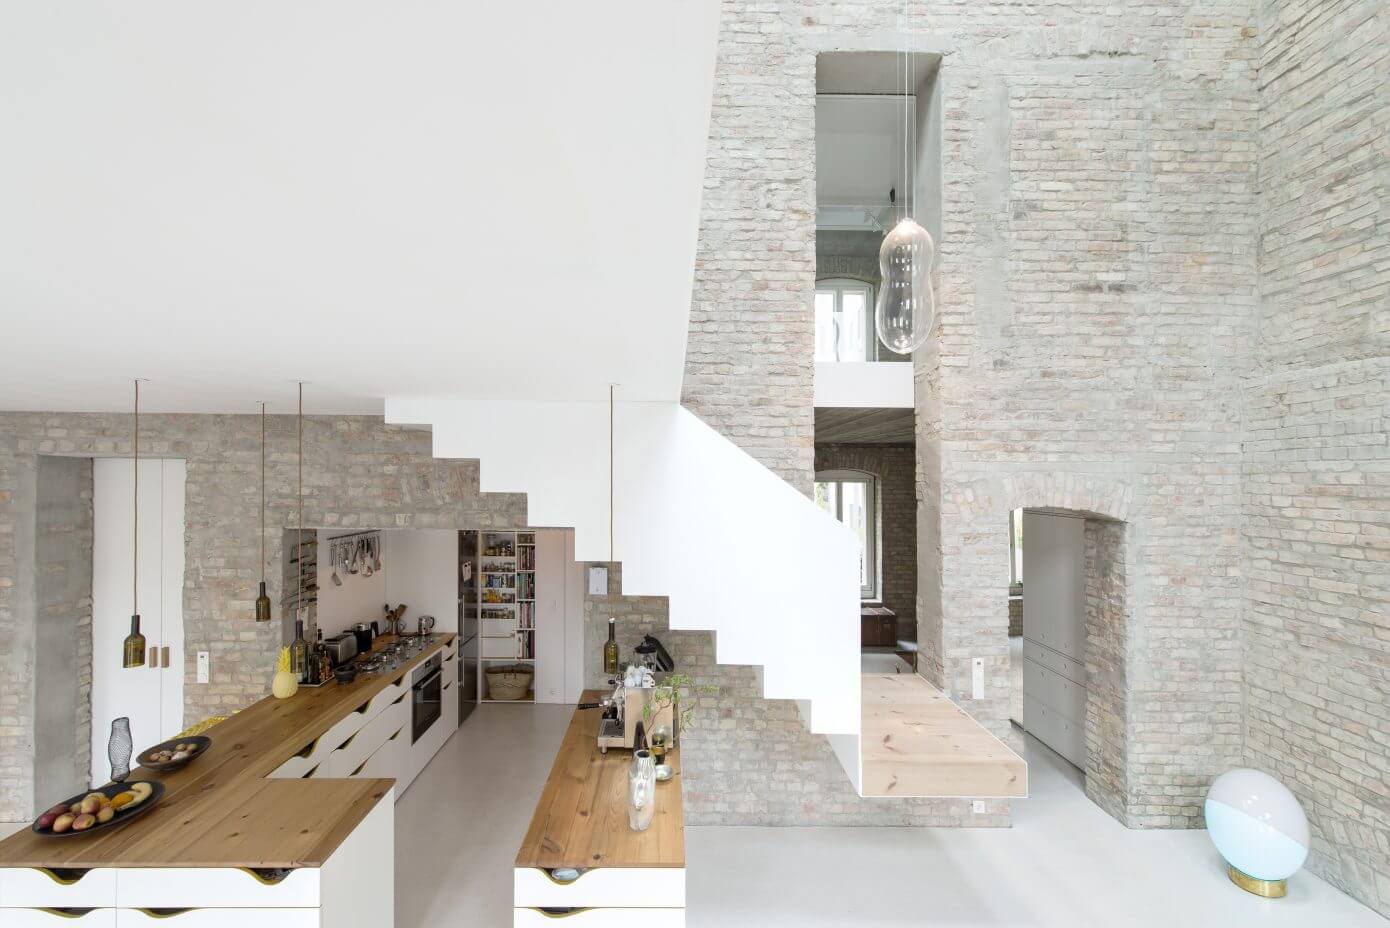 Miller’s House by asdfg Architekten